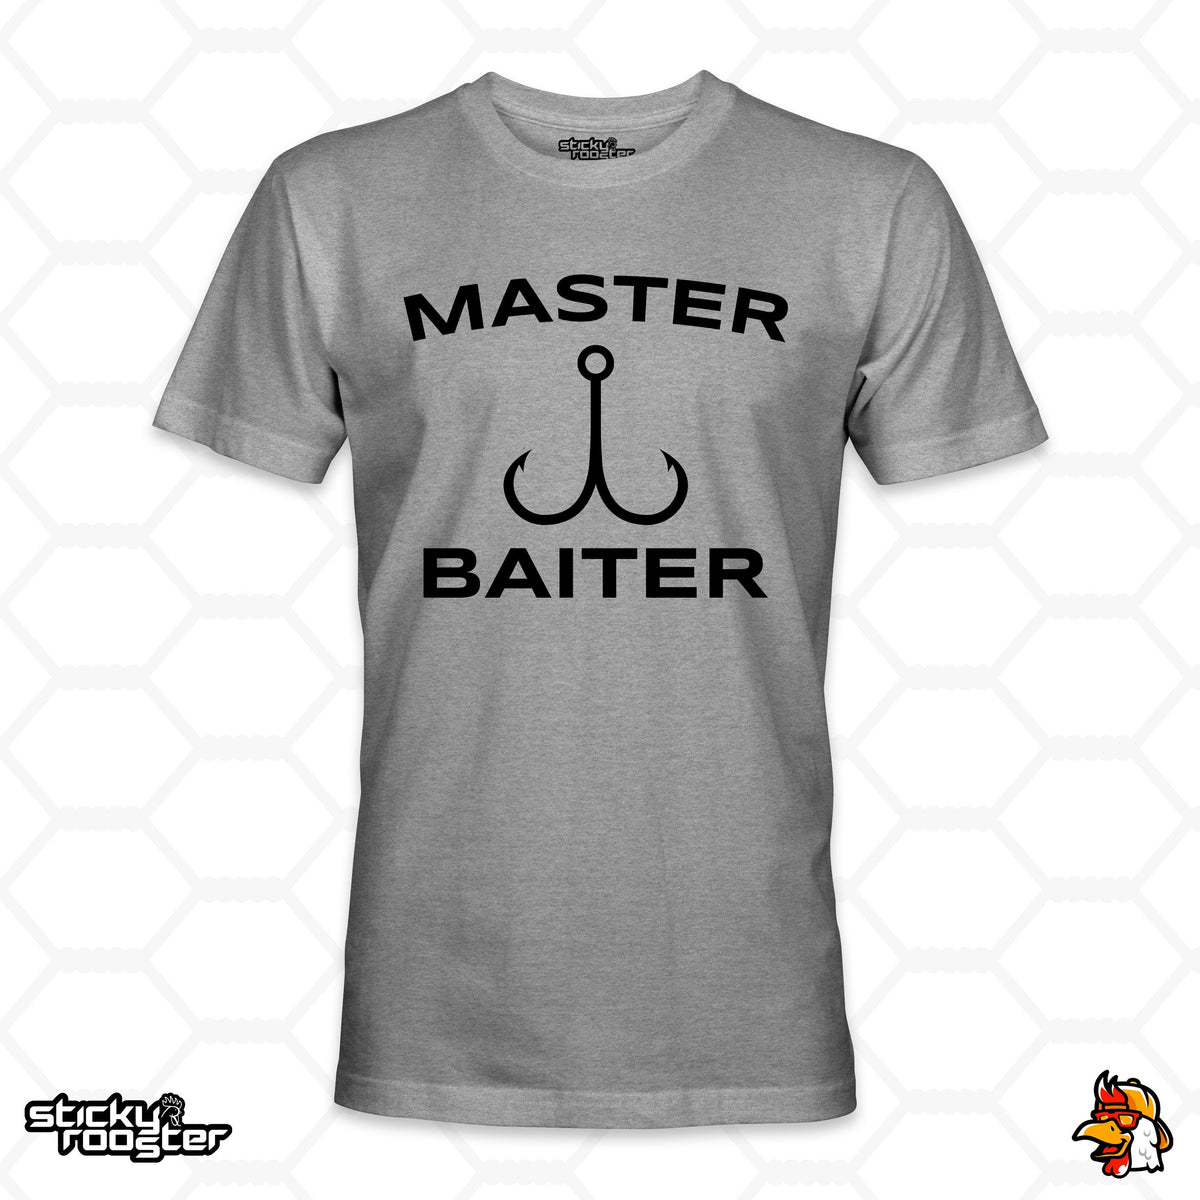 Master Baiter shirt